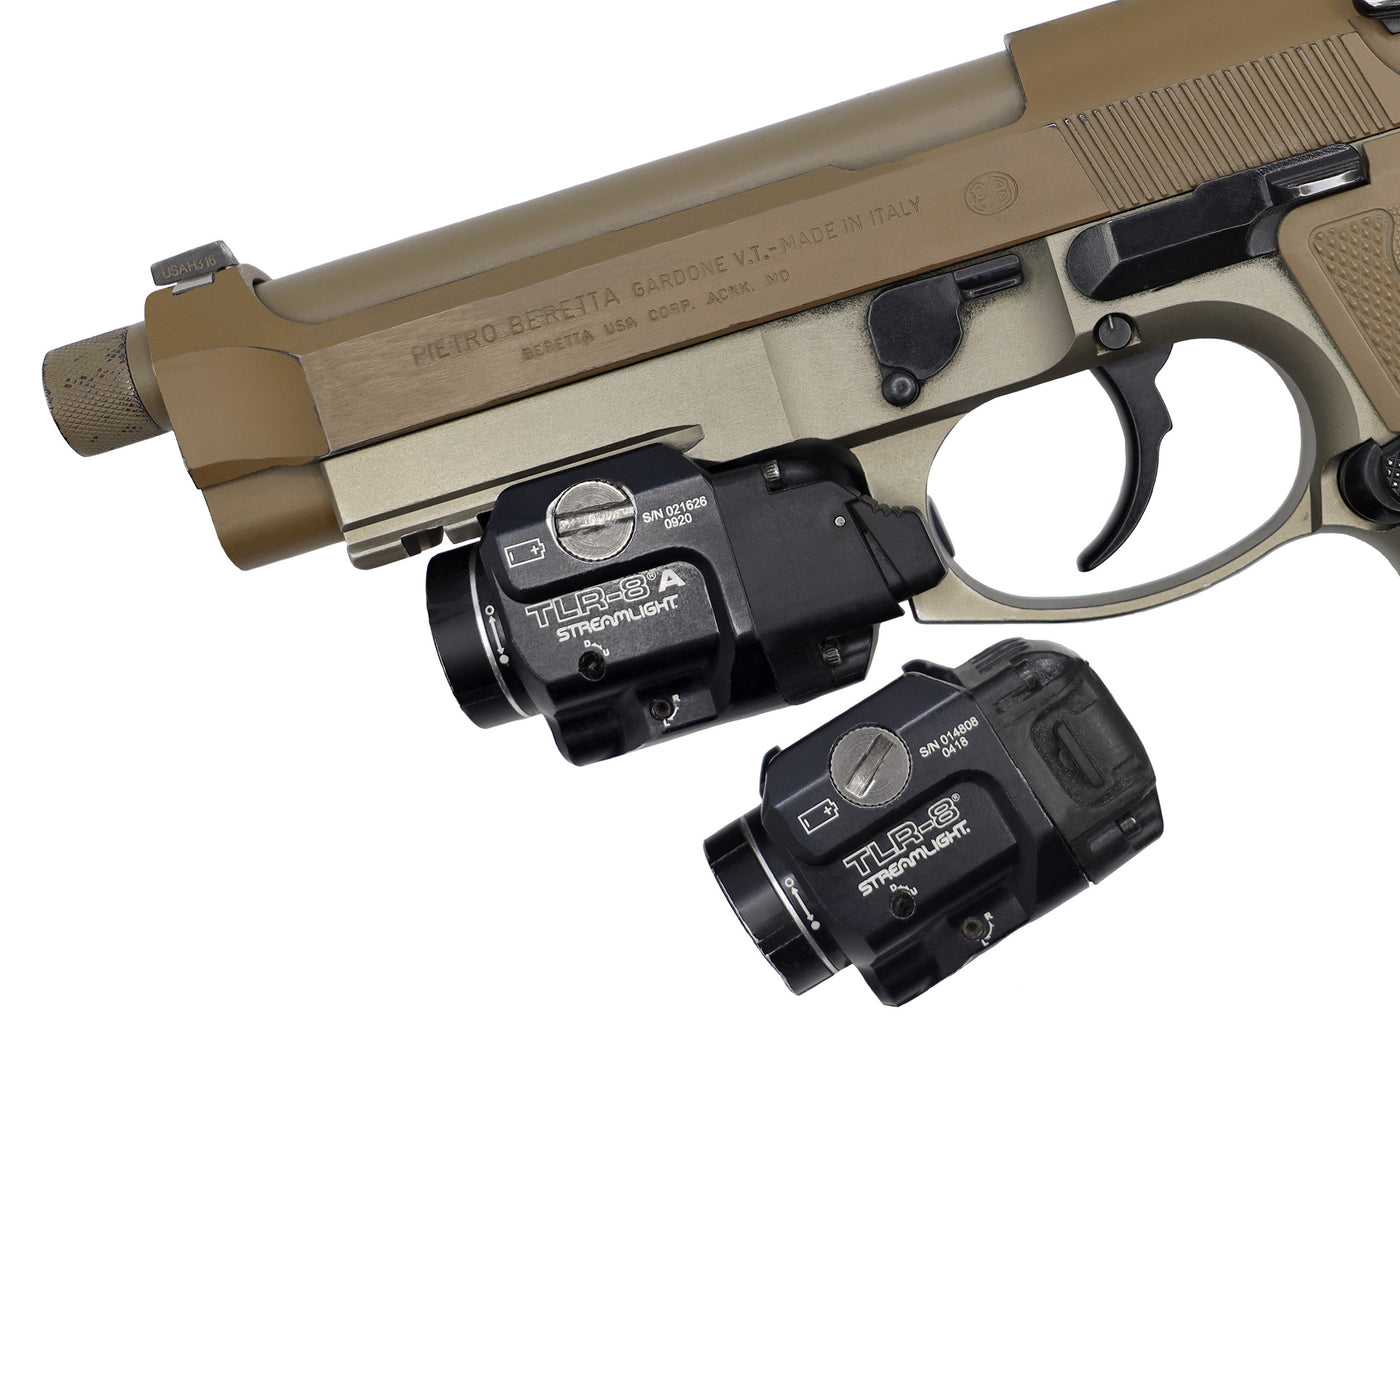 Beretta firearm with streamlight TLR8 weapon light